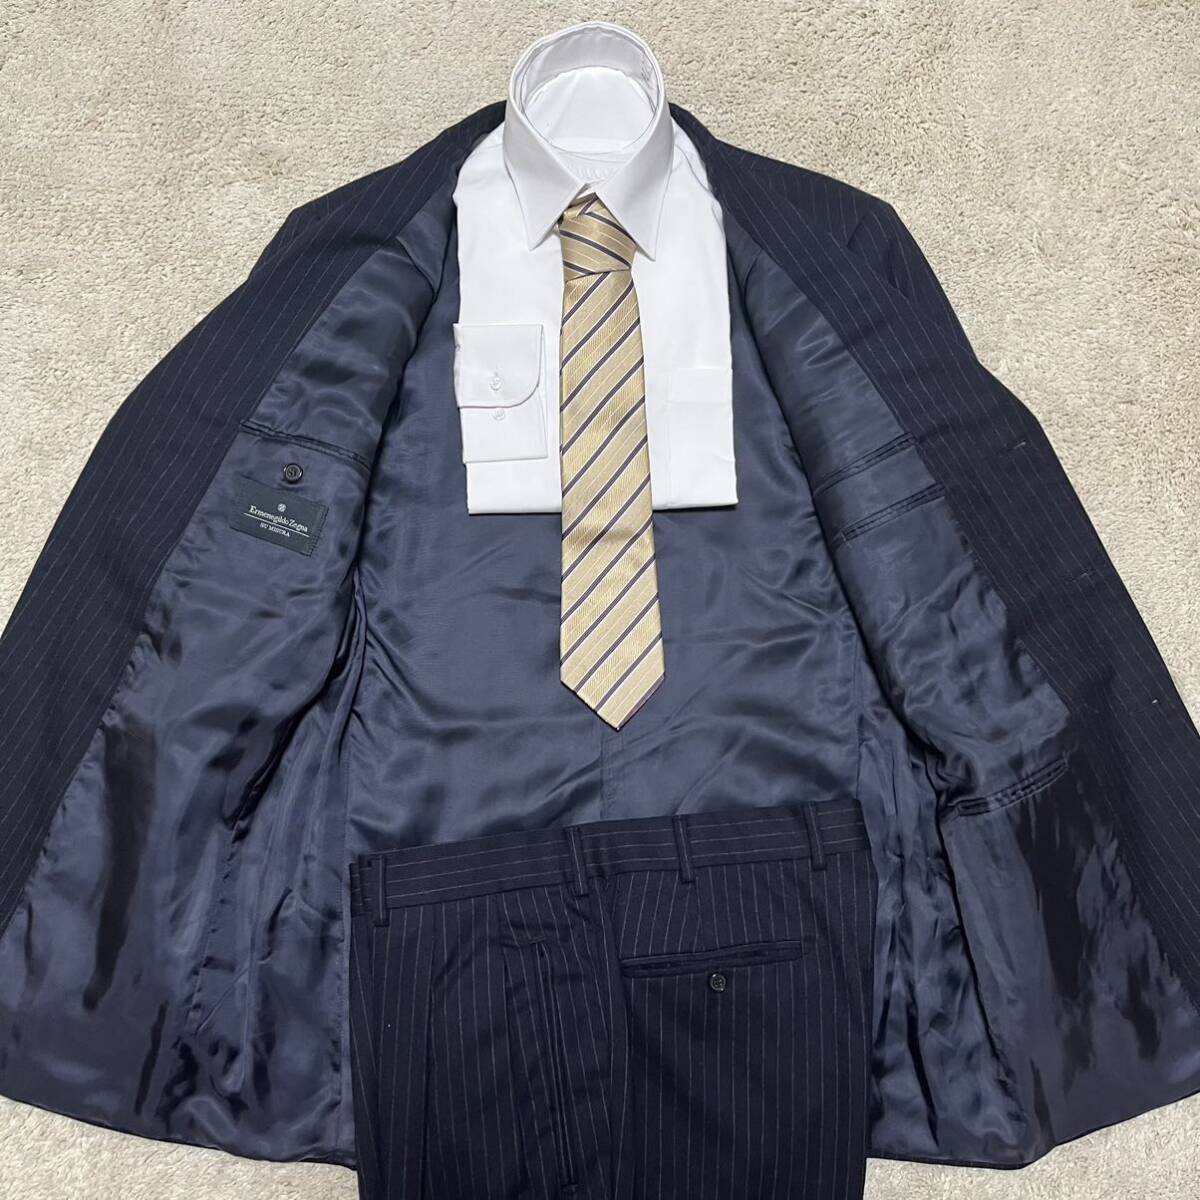 XXL! Ermenegildo Zegna [ gentleman. ..] Zegna SU MISURA suit setup jacket navy navy blue large size 52